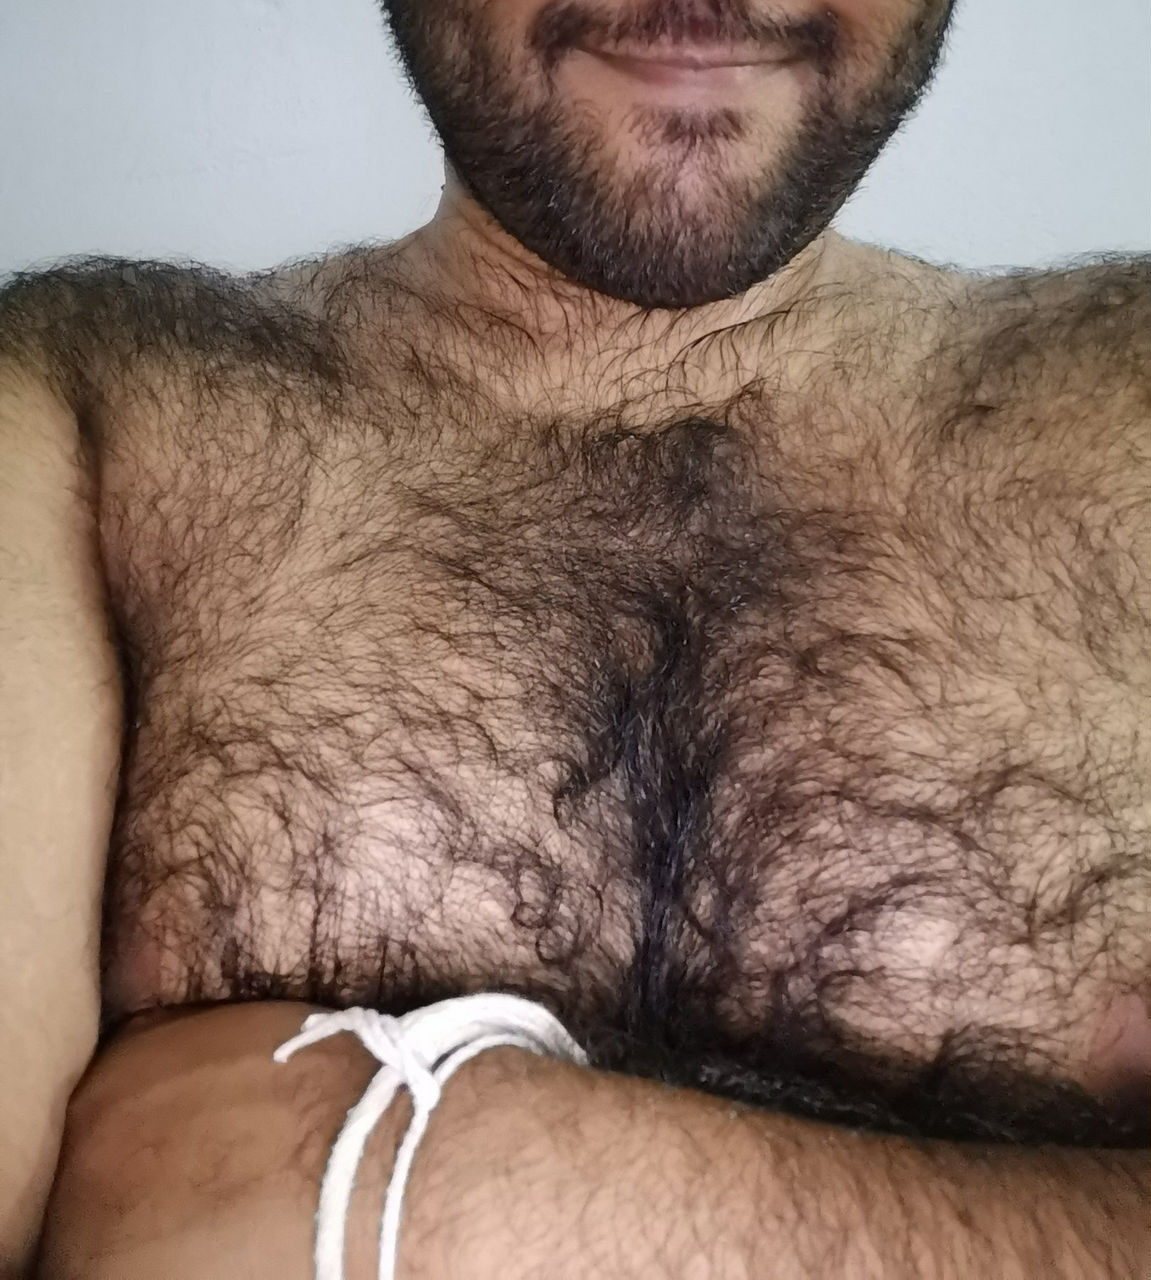 Escorts Colombo, Sri Lanka Big and sexy grizzly bear